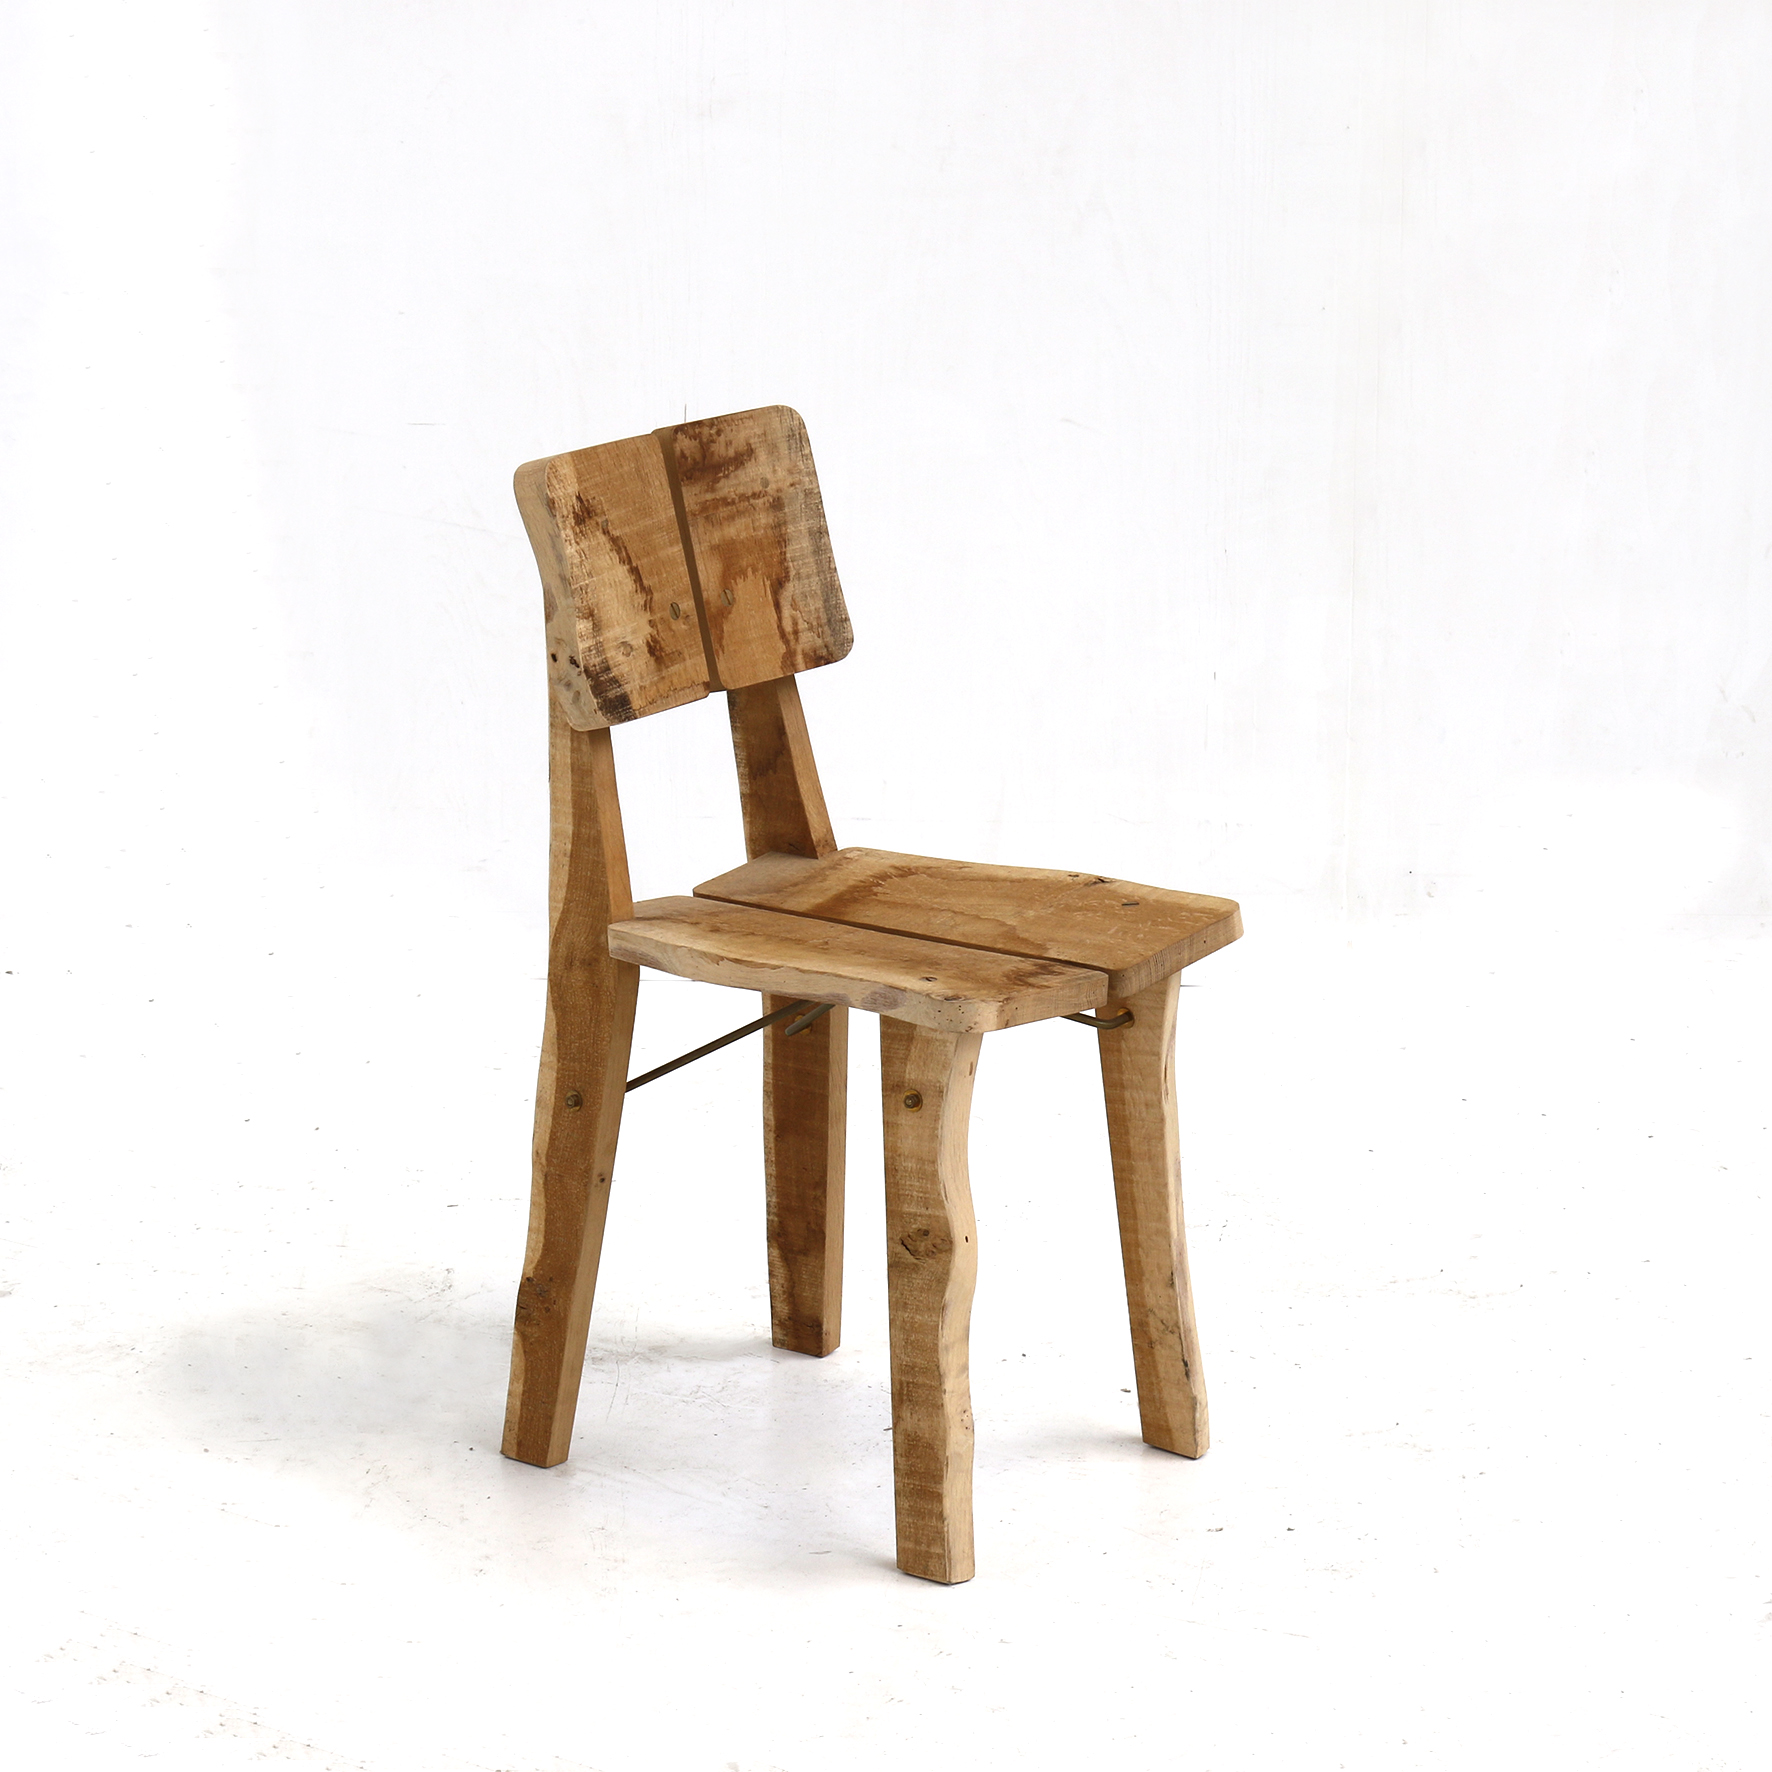 ieuwe-boomstamstoel-1 - new tree trunk chair